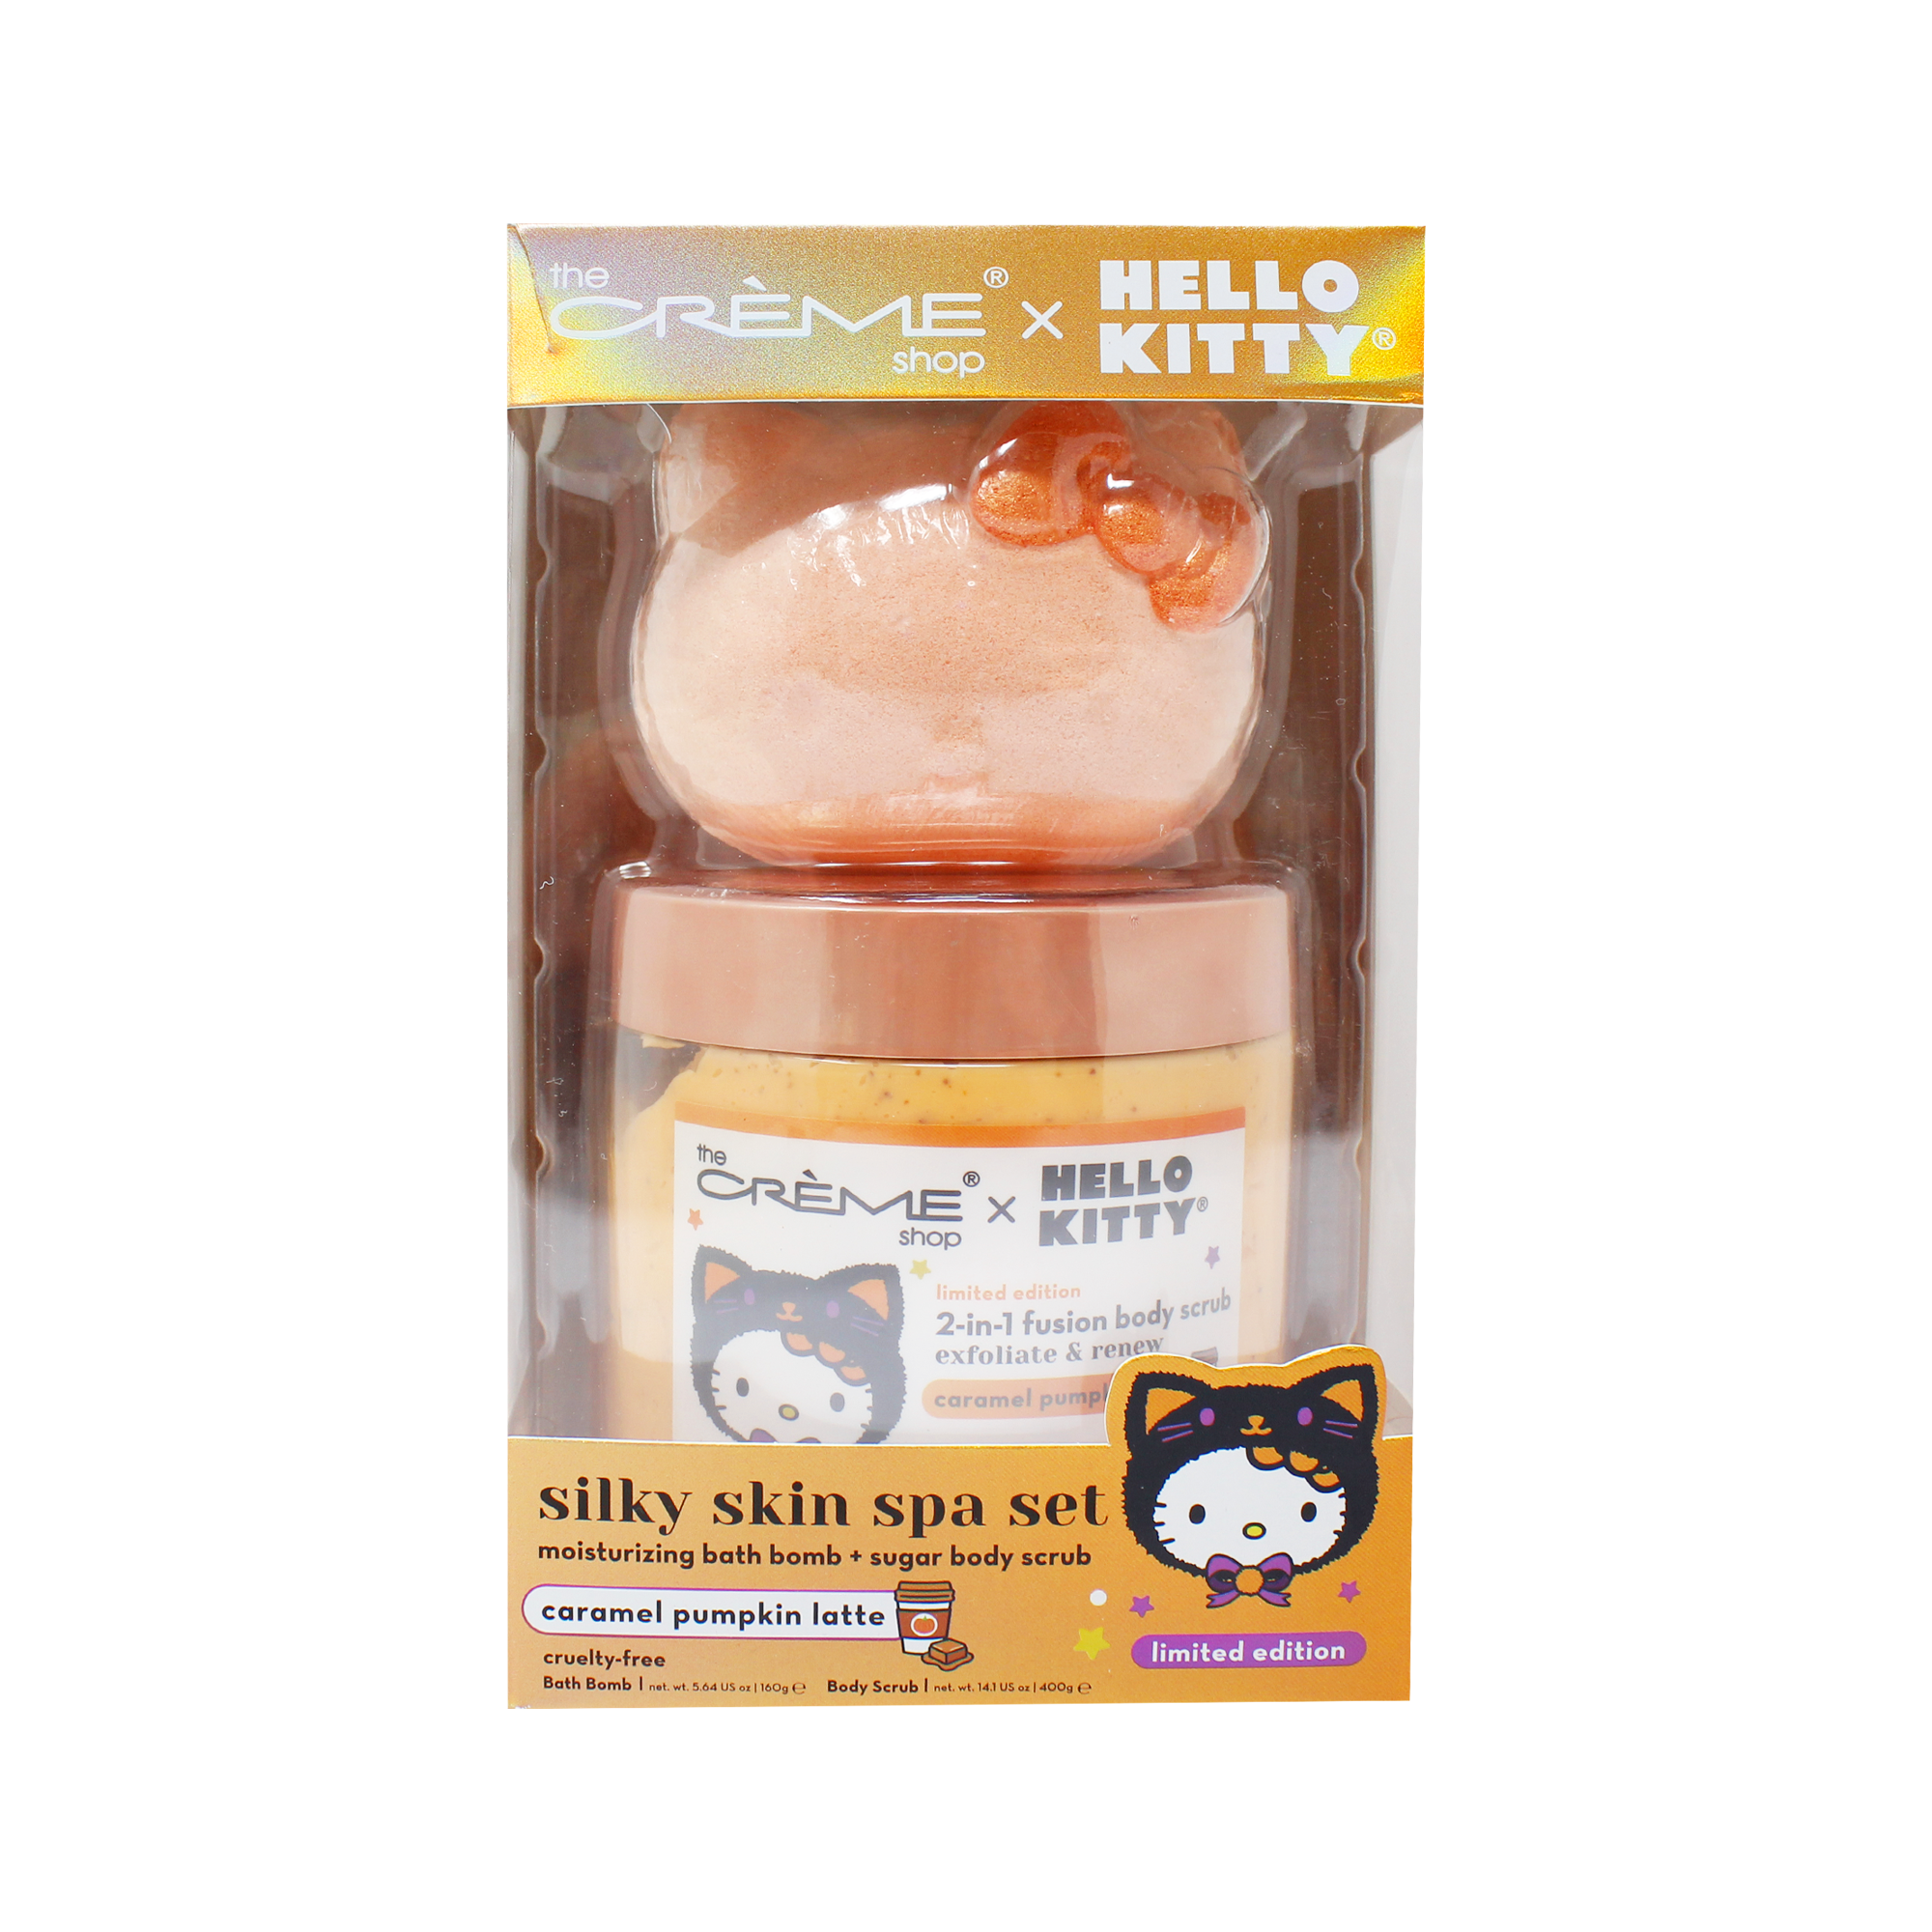 Hello Kitty x The Crème Shop Silky Skin Spa Set (Caramel Pumpkin Latte) Beauty The Crème Shop   